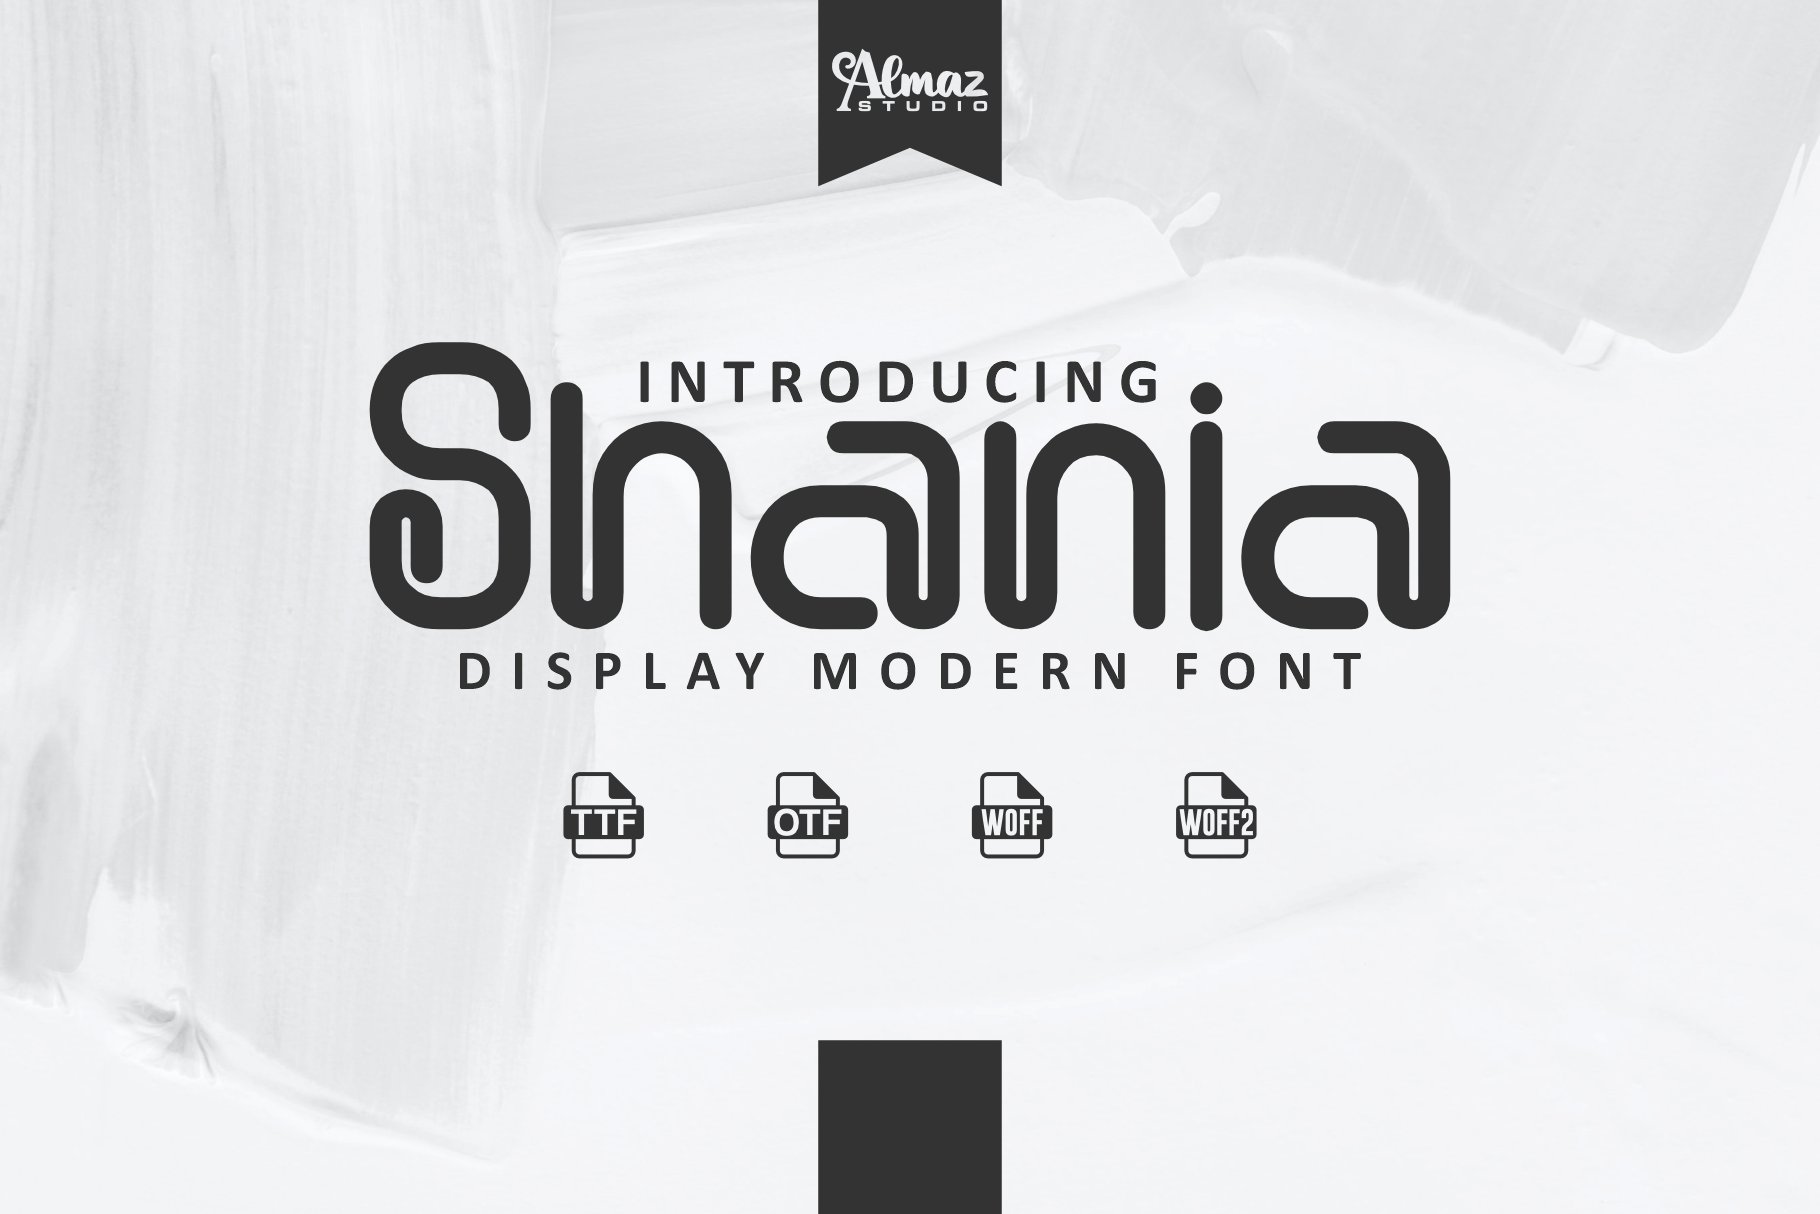 Shania cover image.